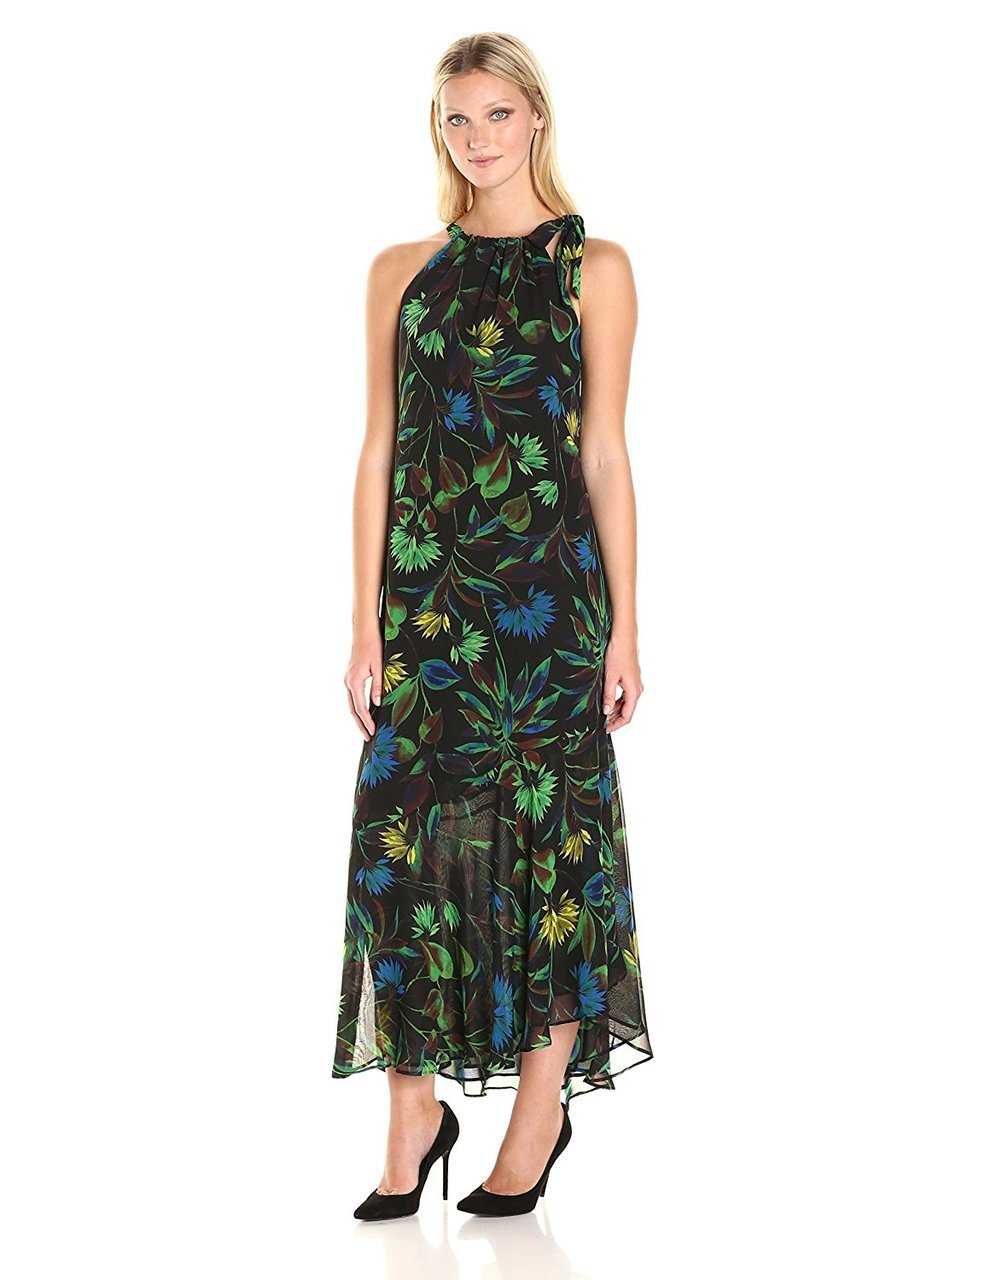 Taylor, Taylor - Floral Printed Sheath Dress 8749M